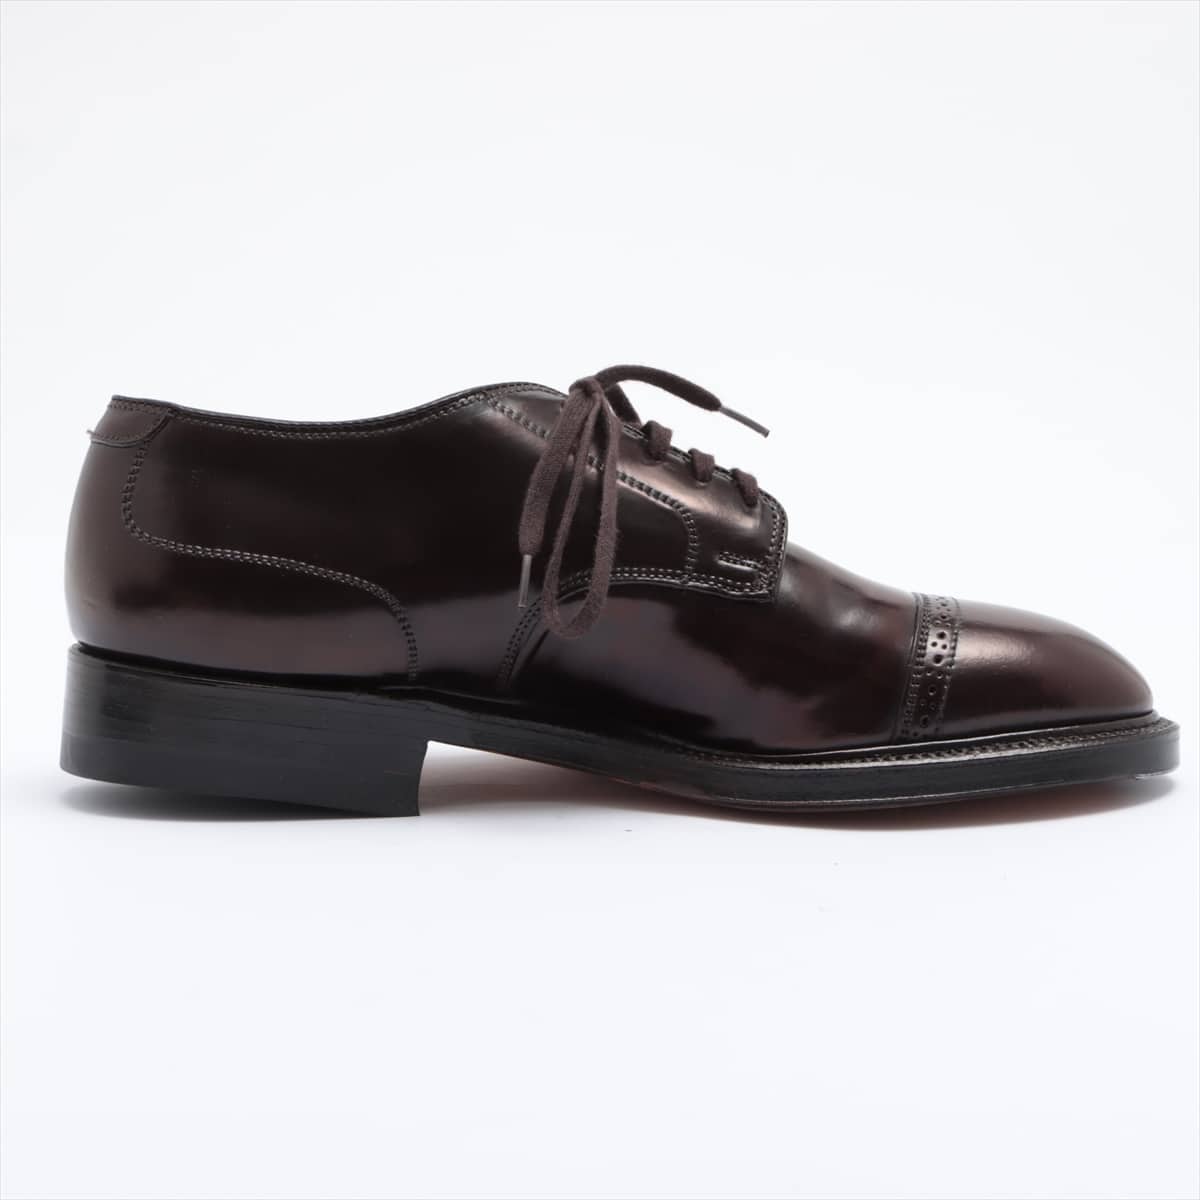 Alden Cordovan Leather shoes 8 Men's Brown